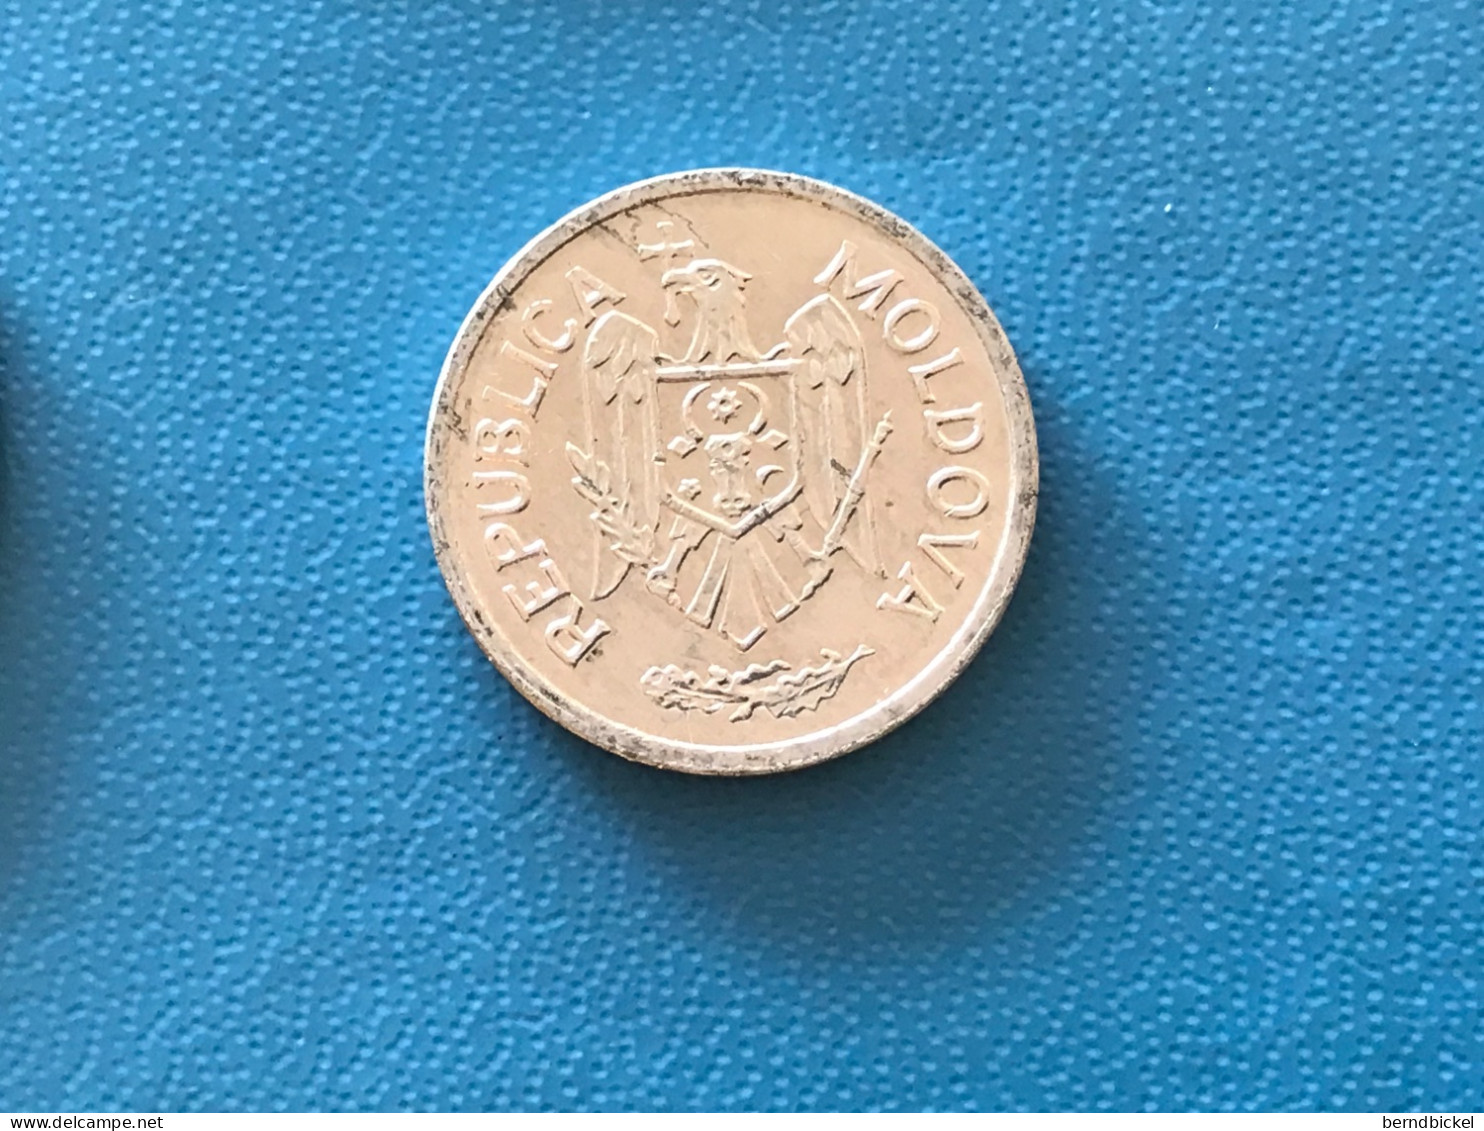 Münze Münzen Umlaufmünze Moldawien 25 Bani 2017 - Moldawien (Moldau)